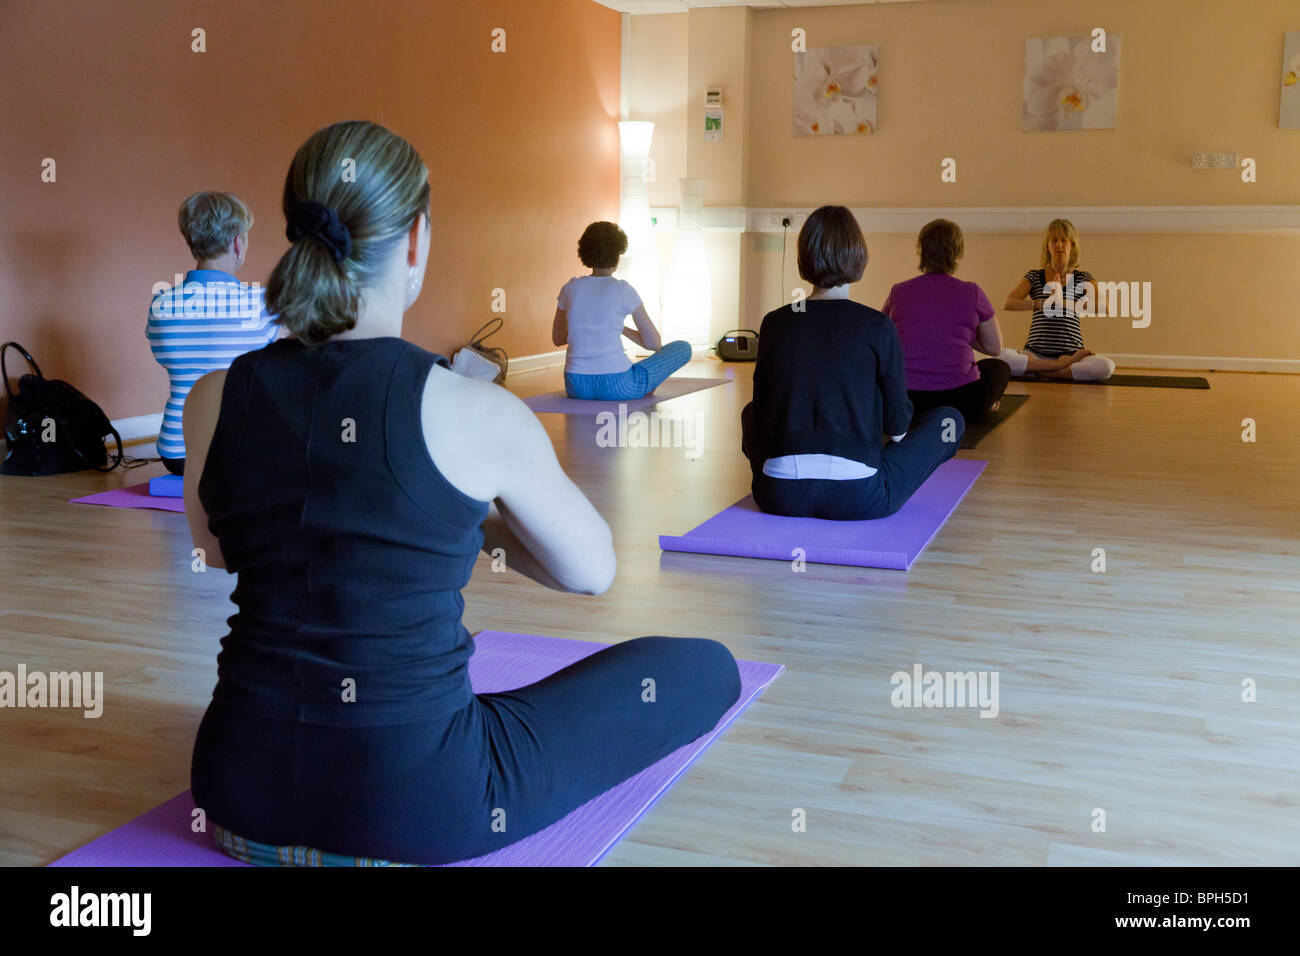 women in a meditation / yoga class Stock Photo